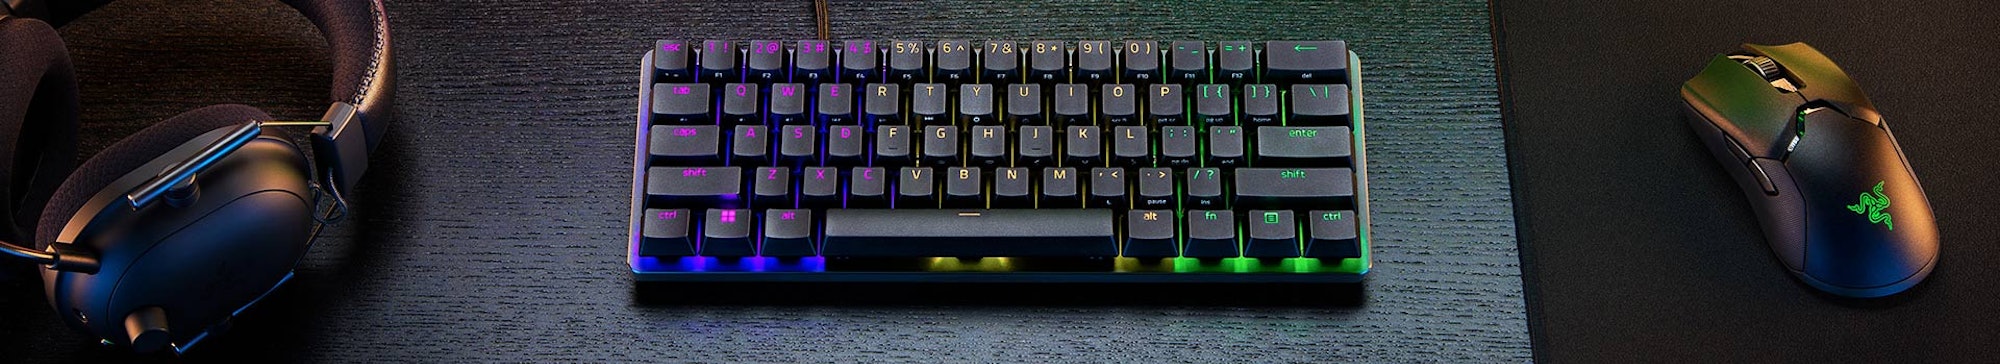 Razer's Huntsman Mini Analog 60 percent keyboard